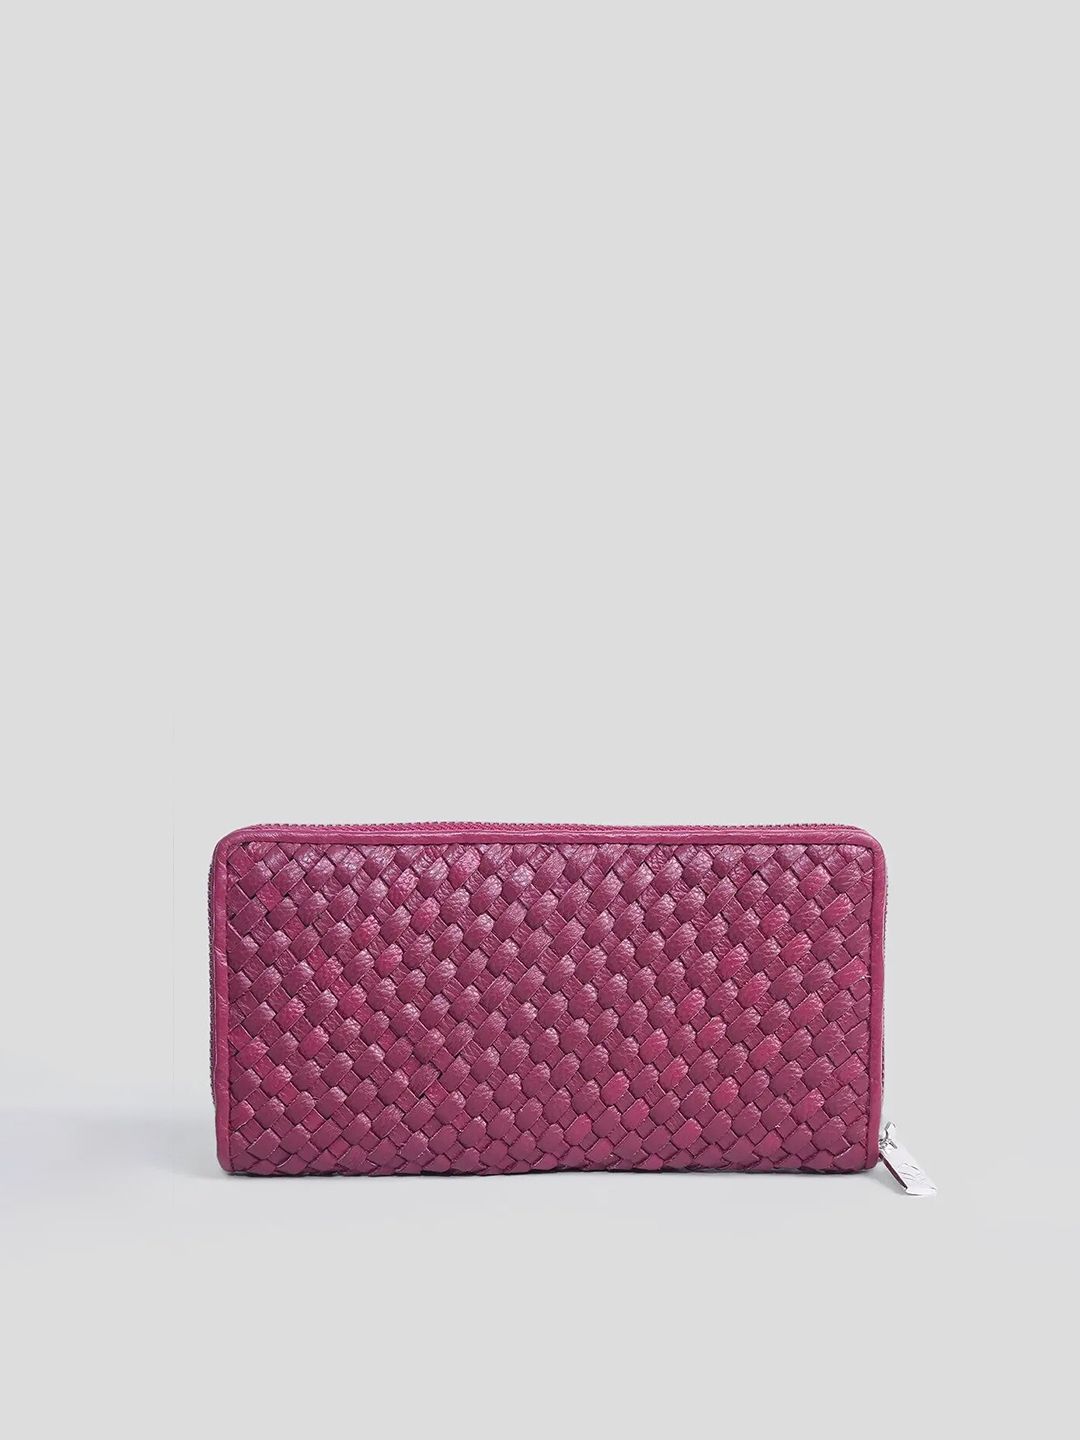 Biba Women Pink Woven Design Leather Zip Around Wallet Price in India